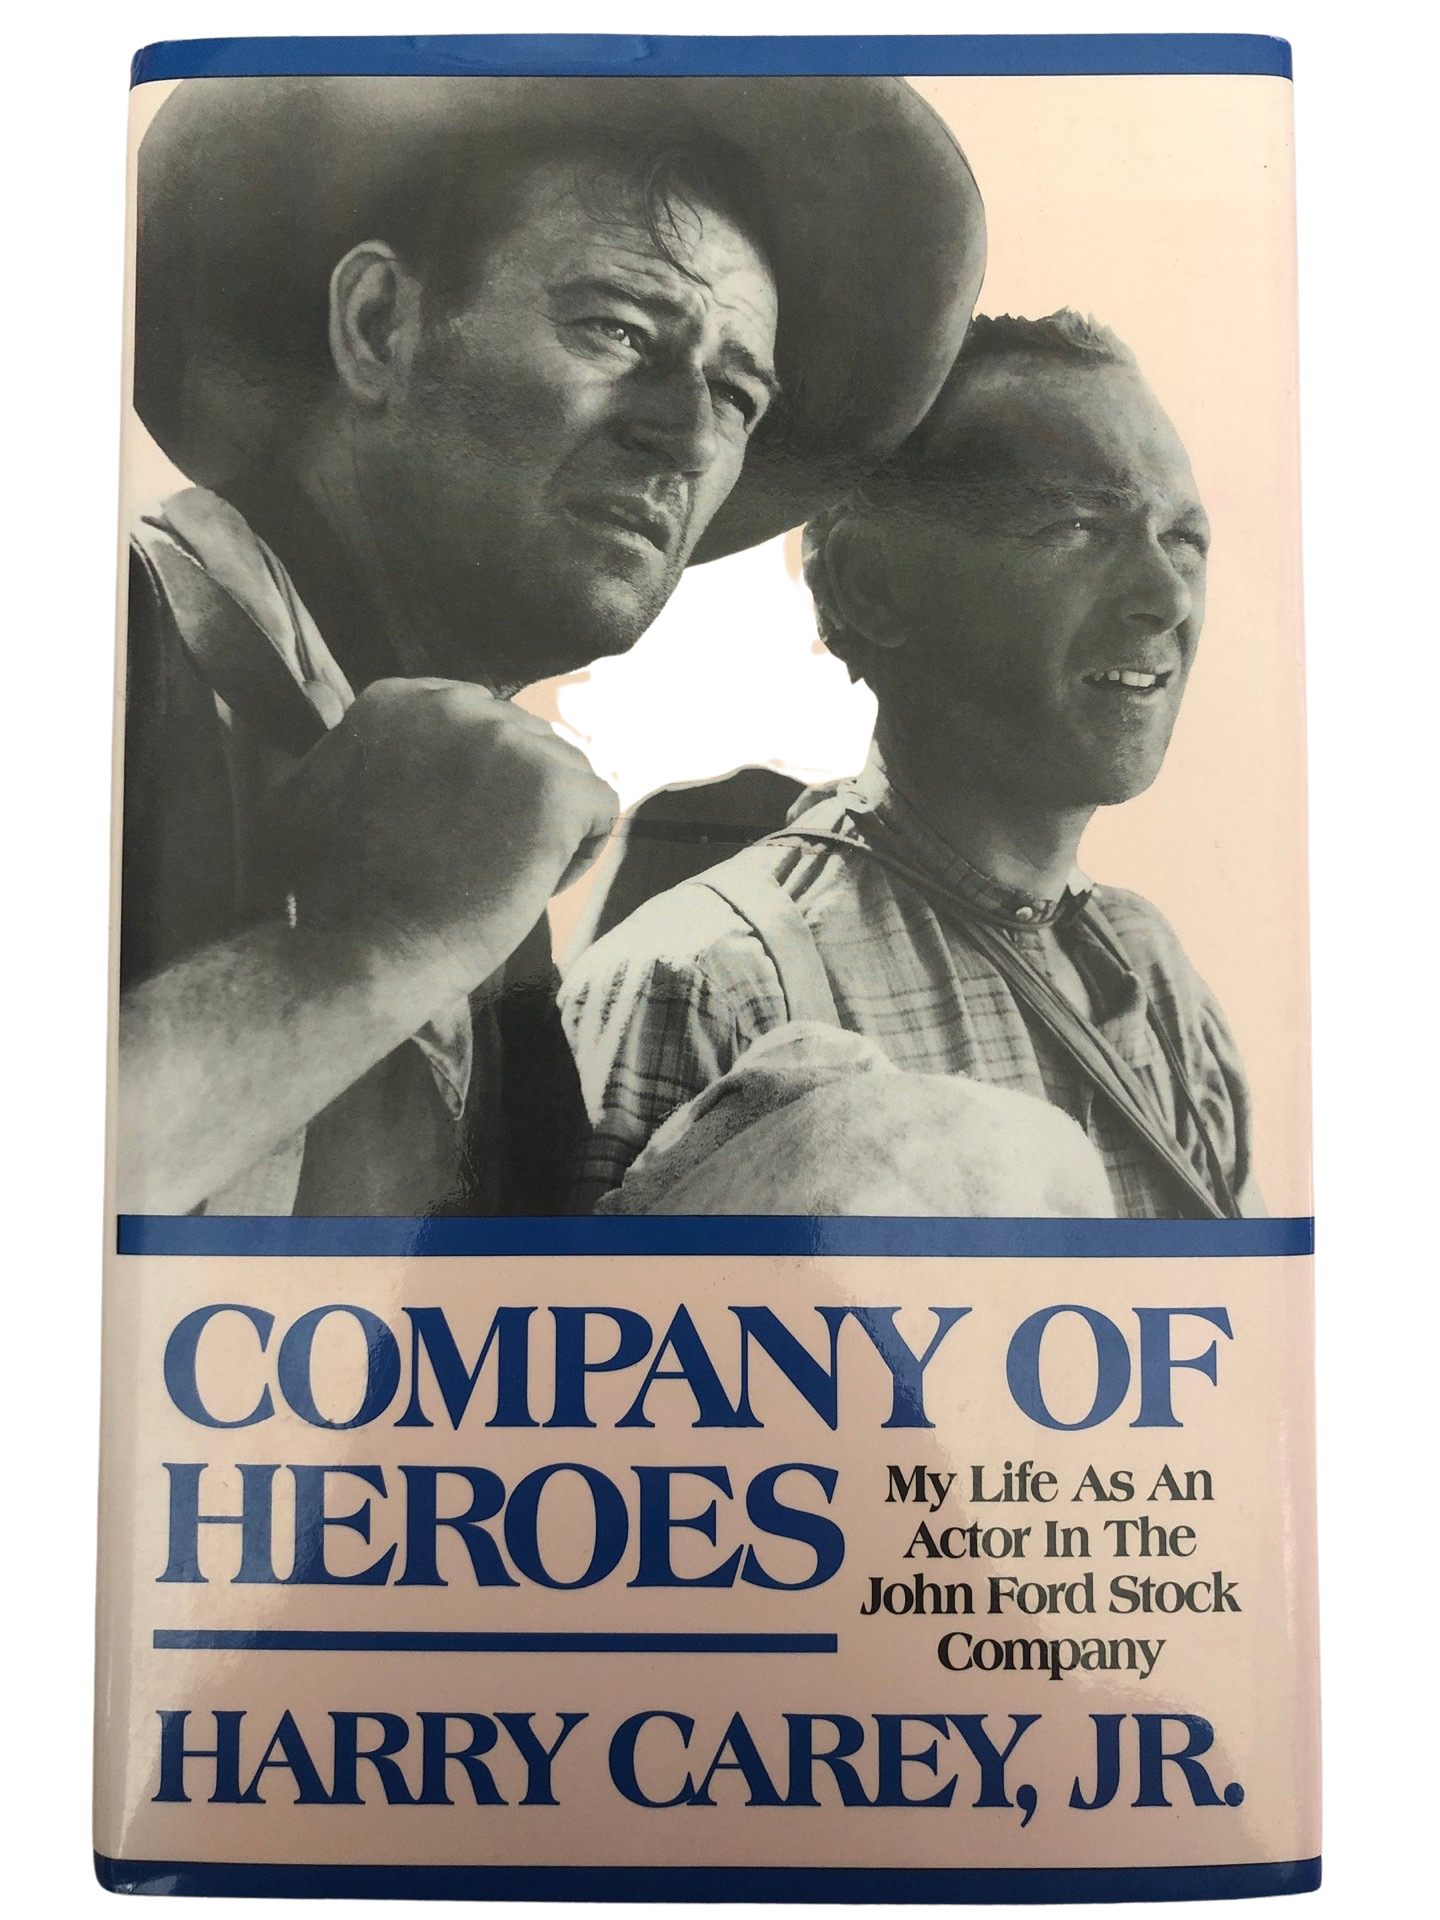 Company of Heroes by Harry Carey, Jr.